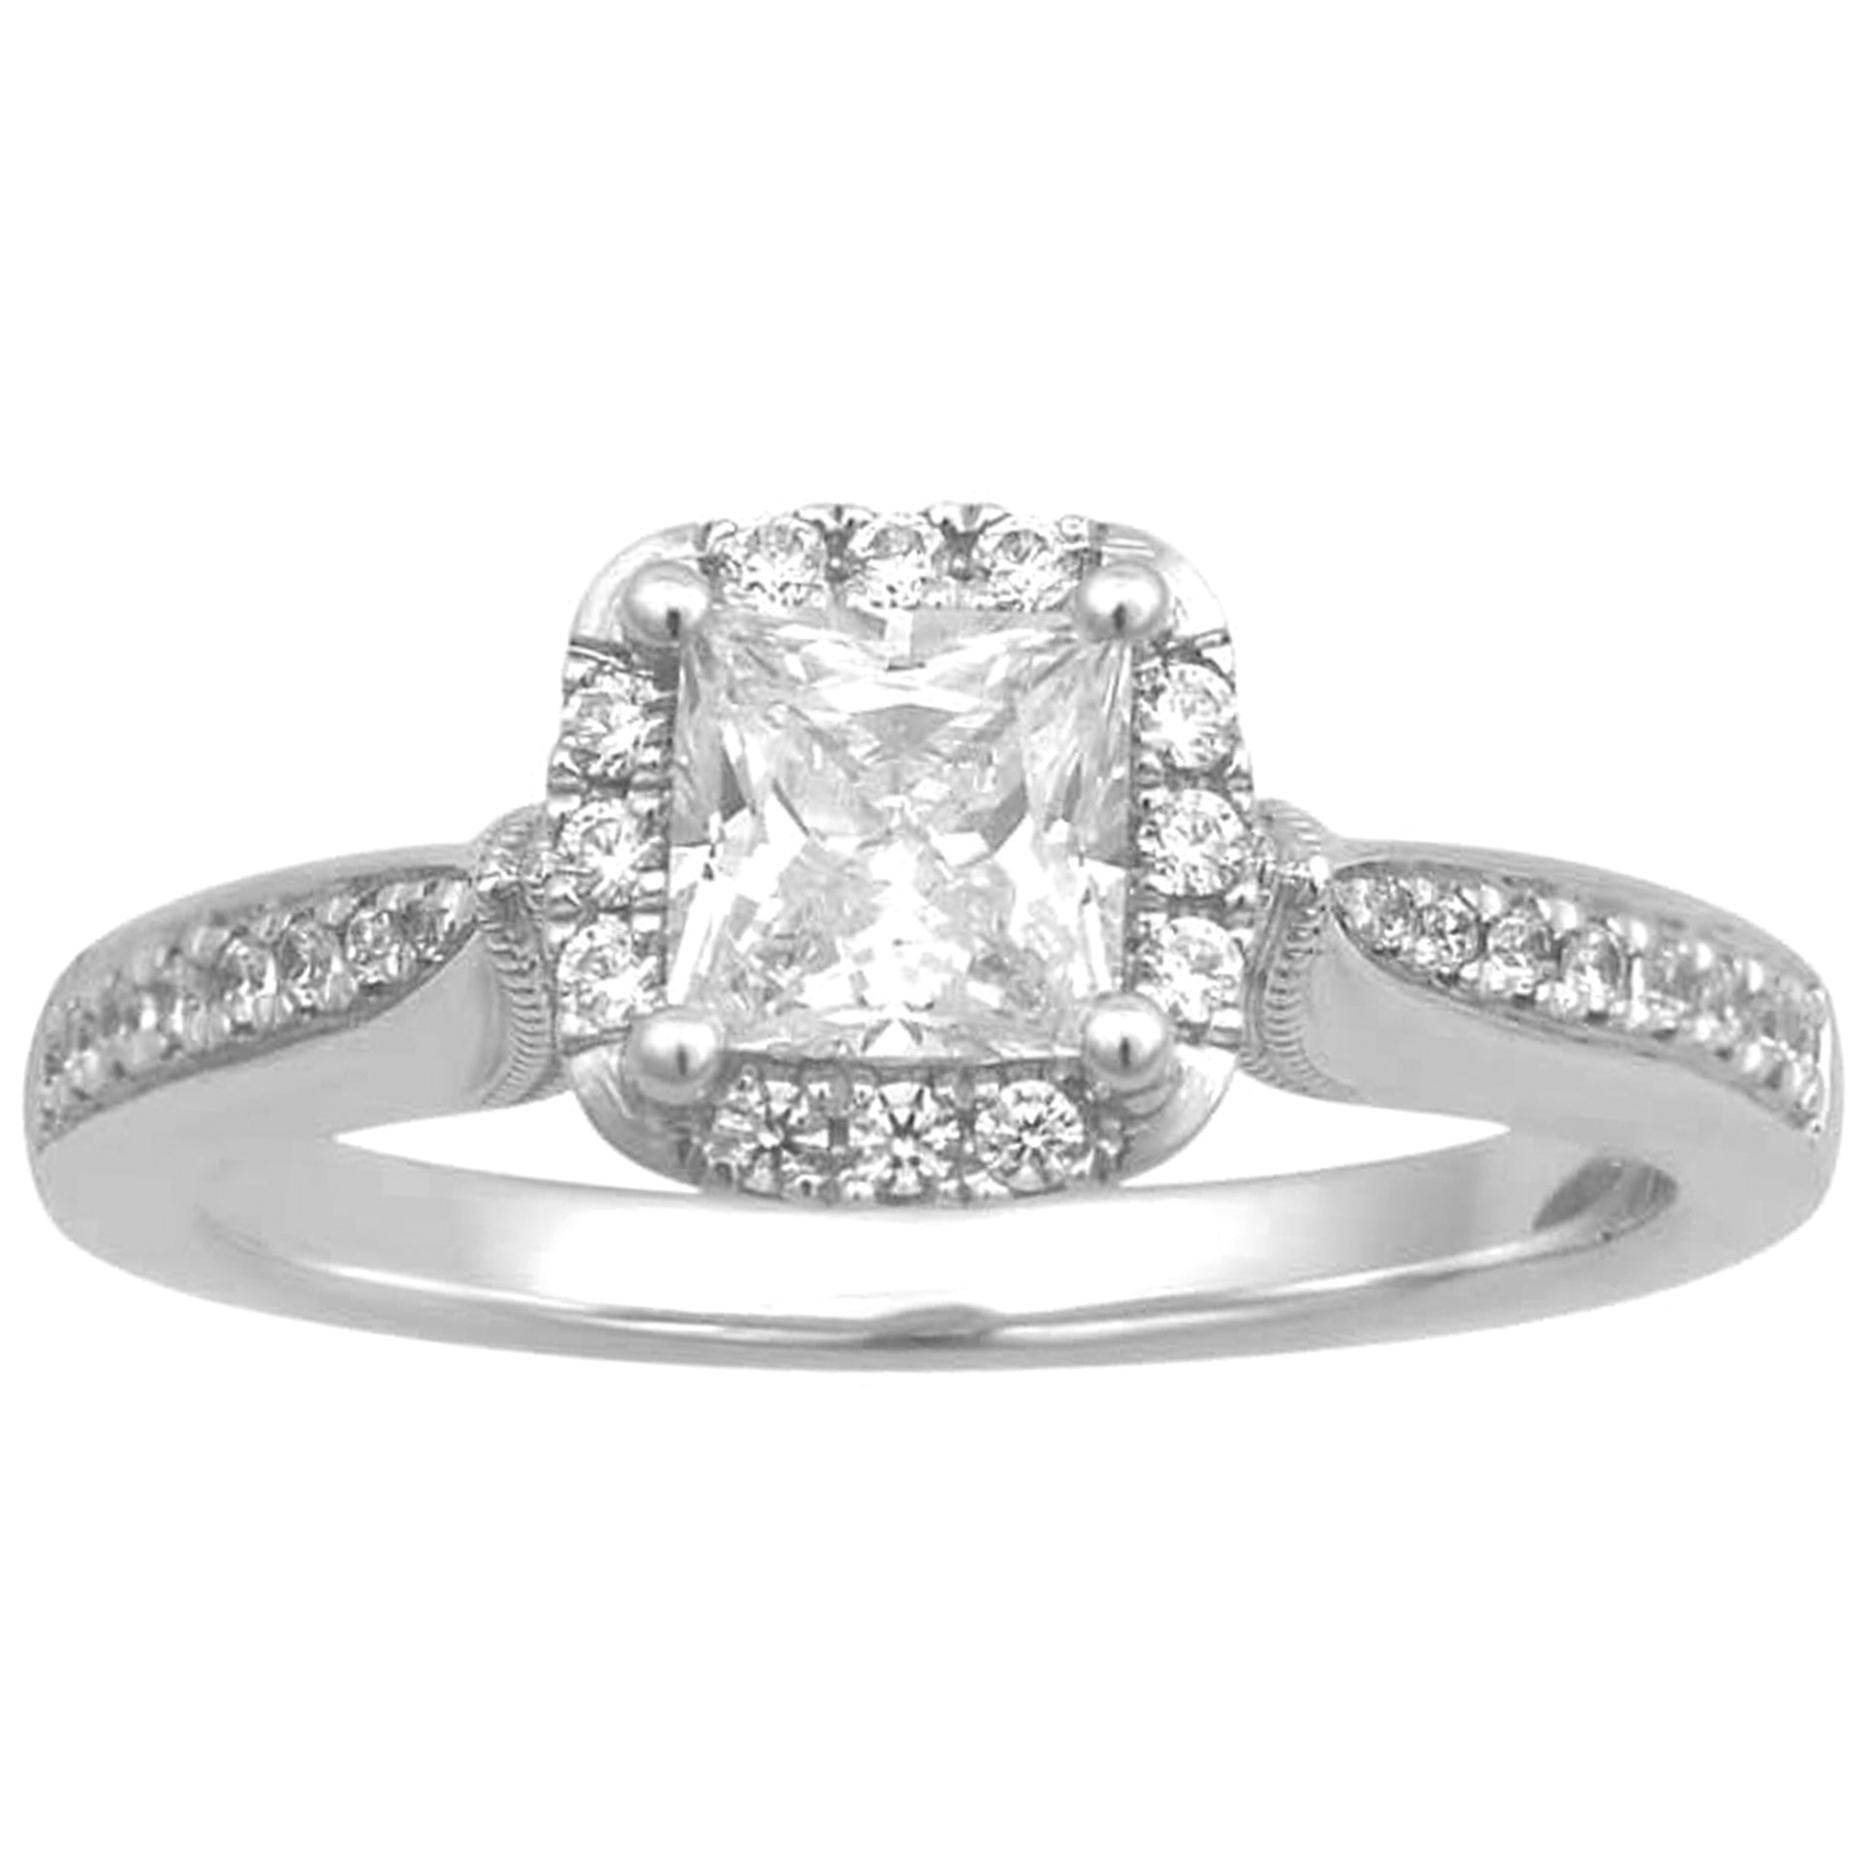 TJD 1.00 Carat Round & Princess Cut Diamond 18K White Gold Halo Engagement Ring